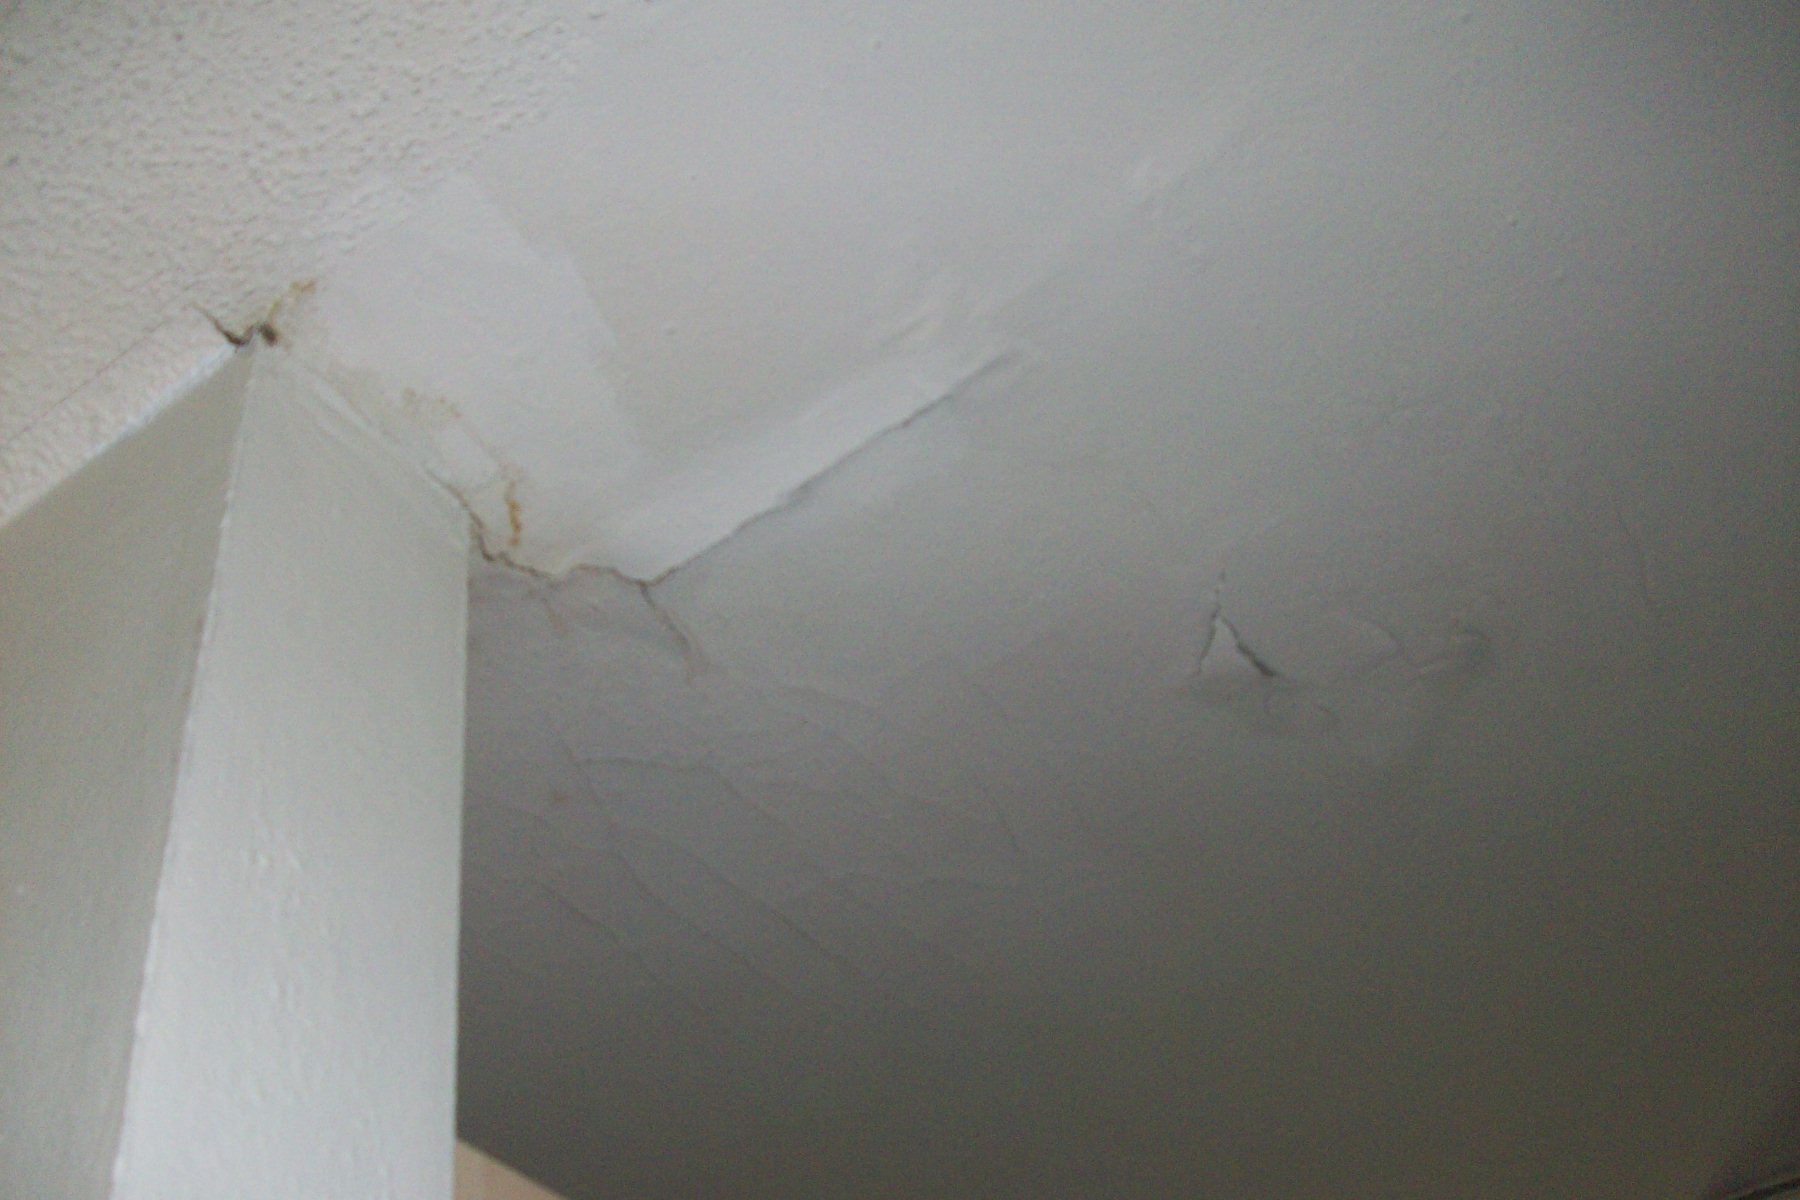 Sinkhole cracks in ceiling